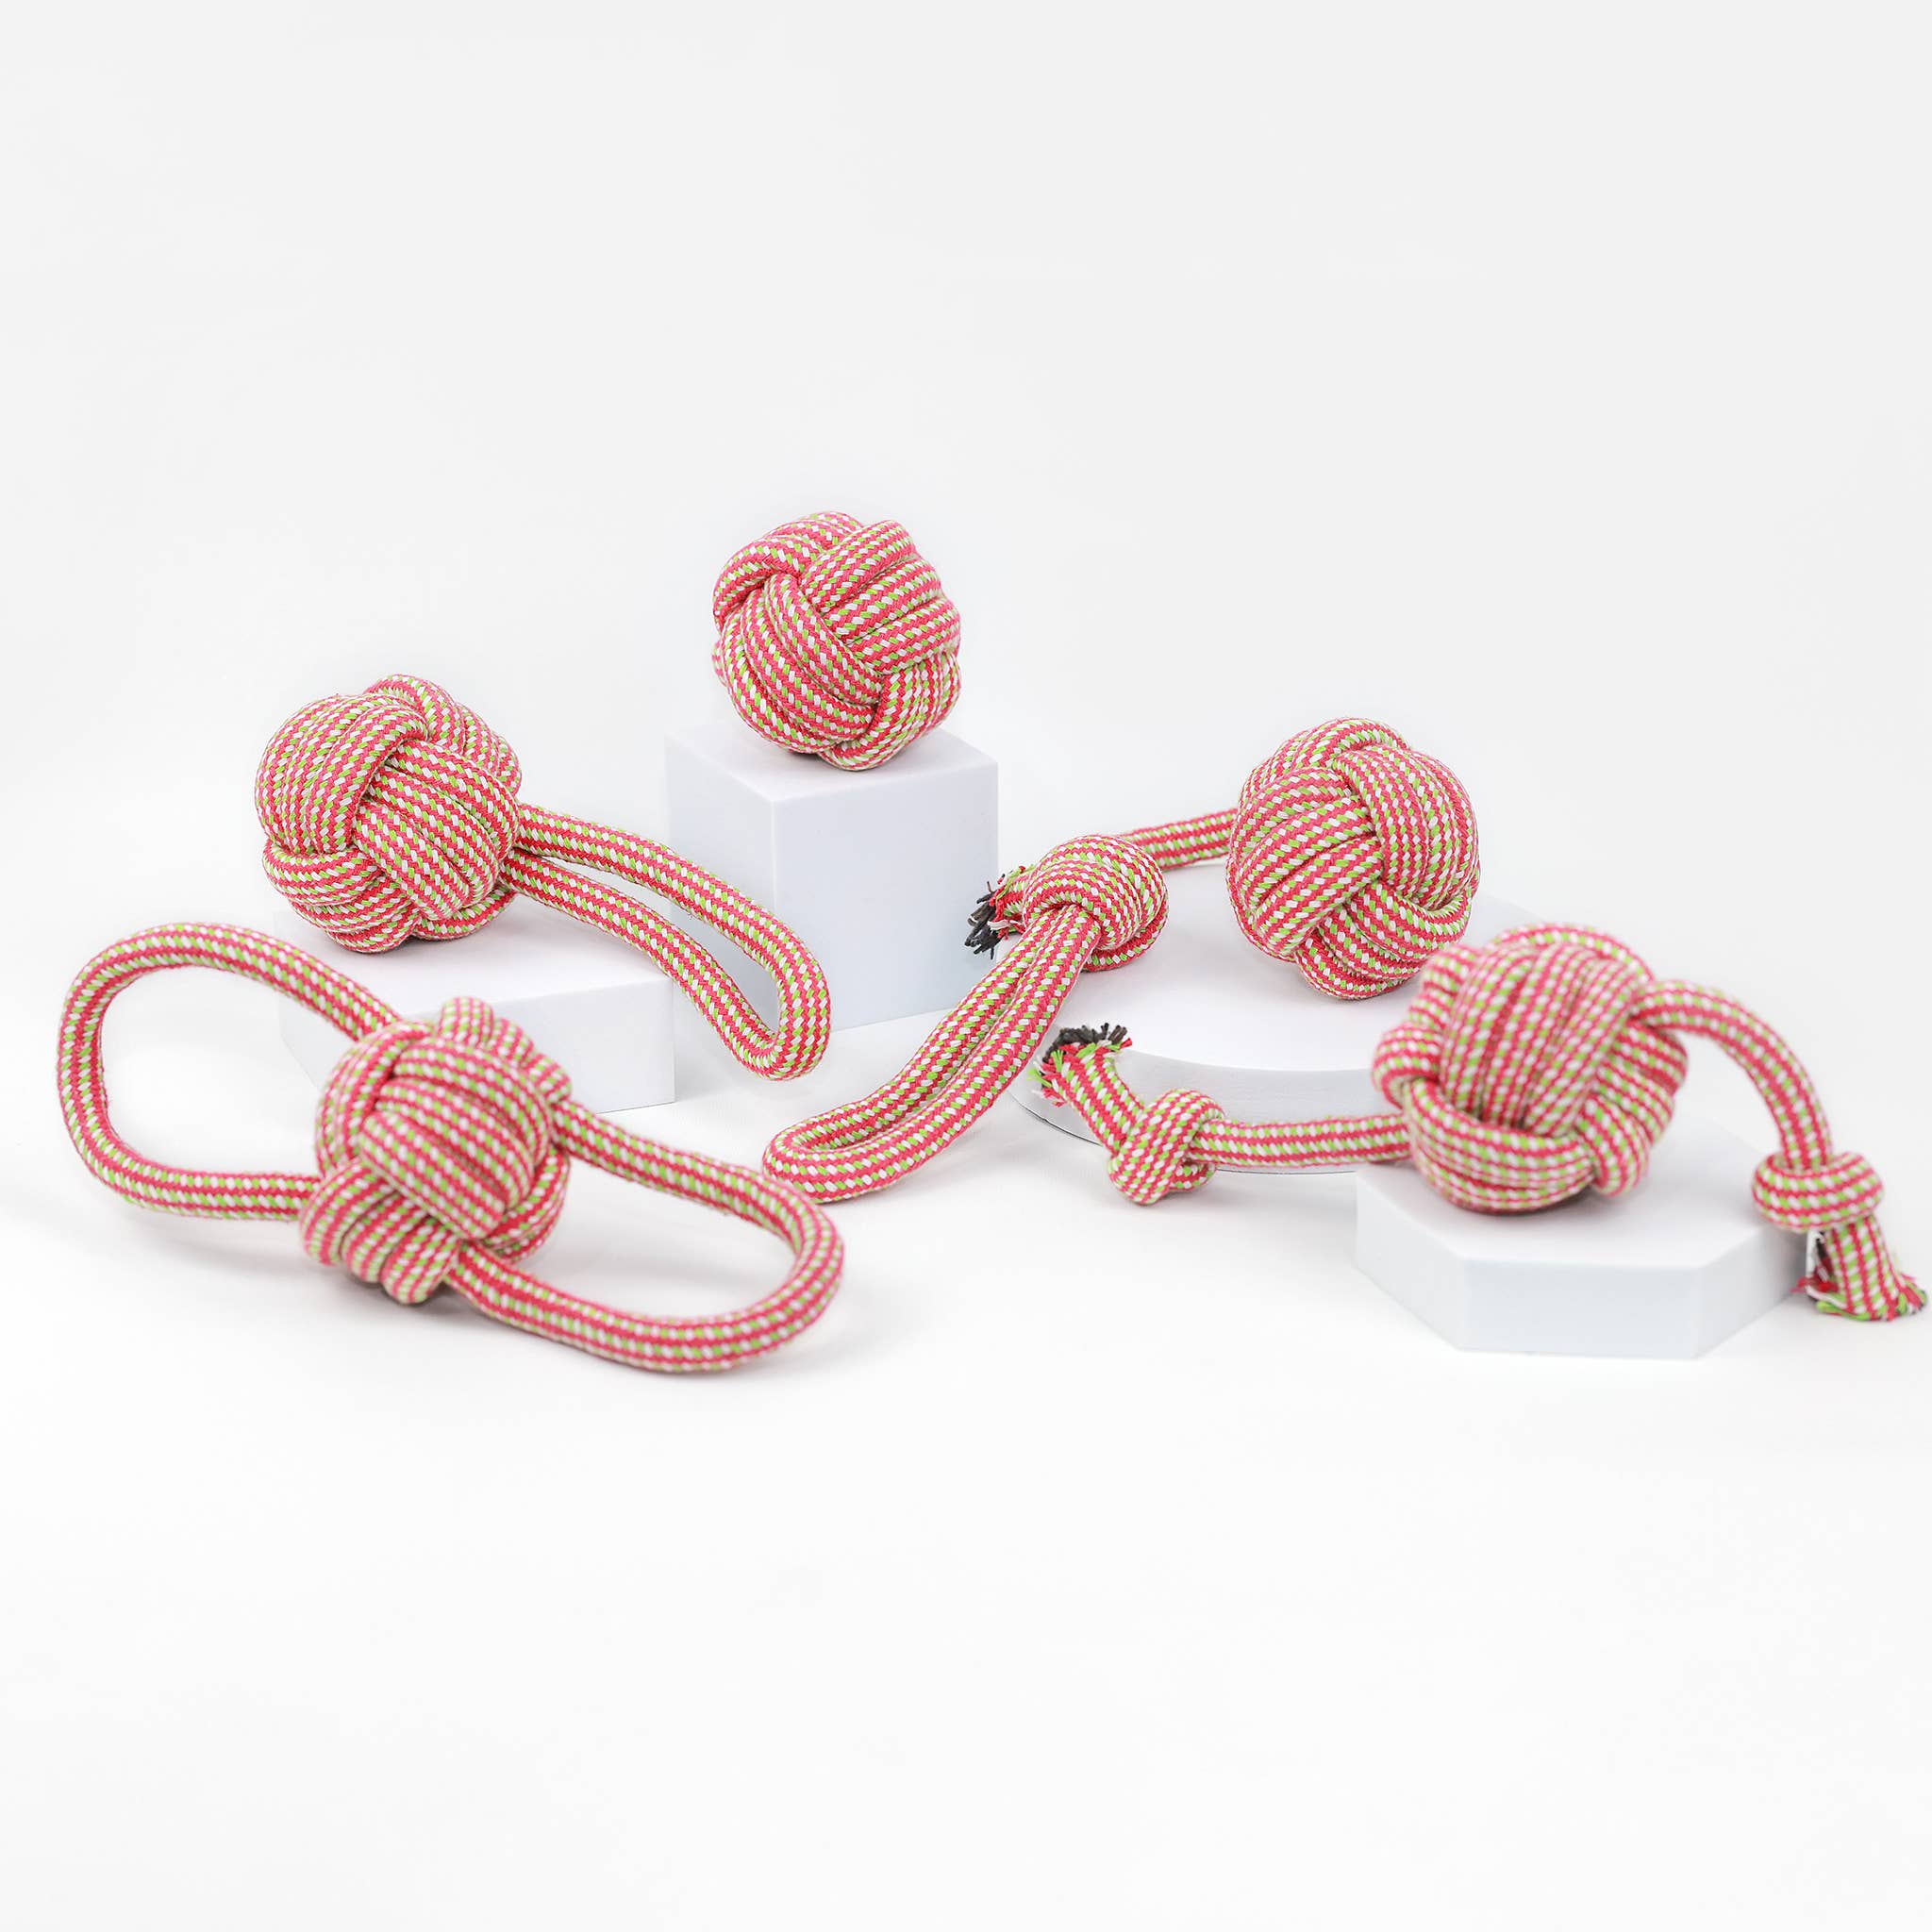 Pink and Green Tug Rope Ball | Handmade| Sustainable| Loop